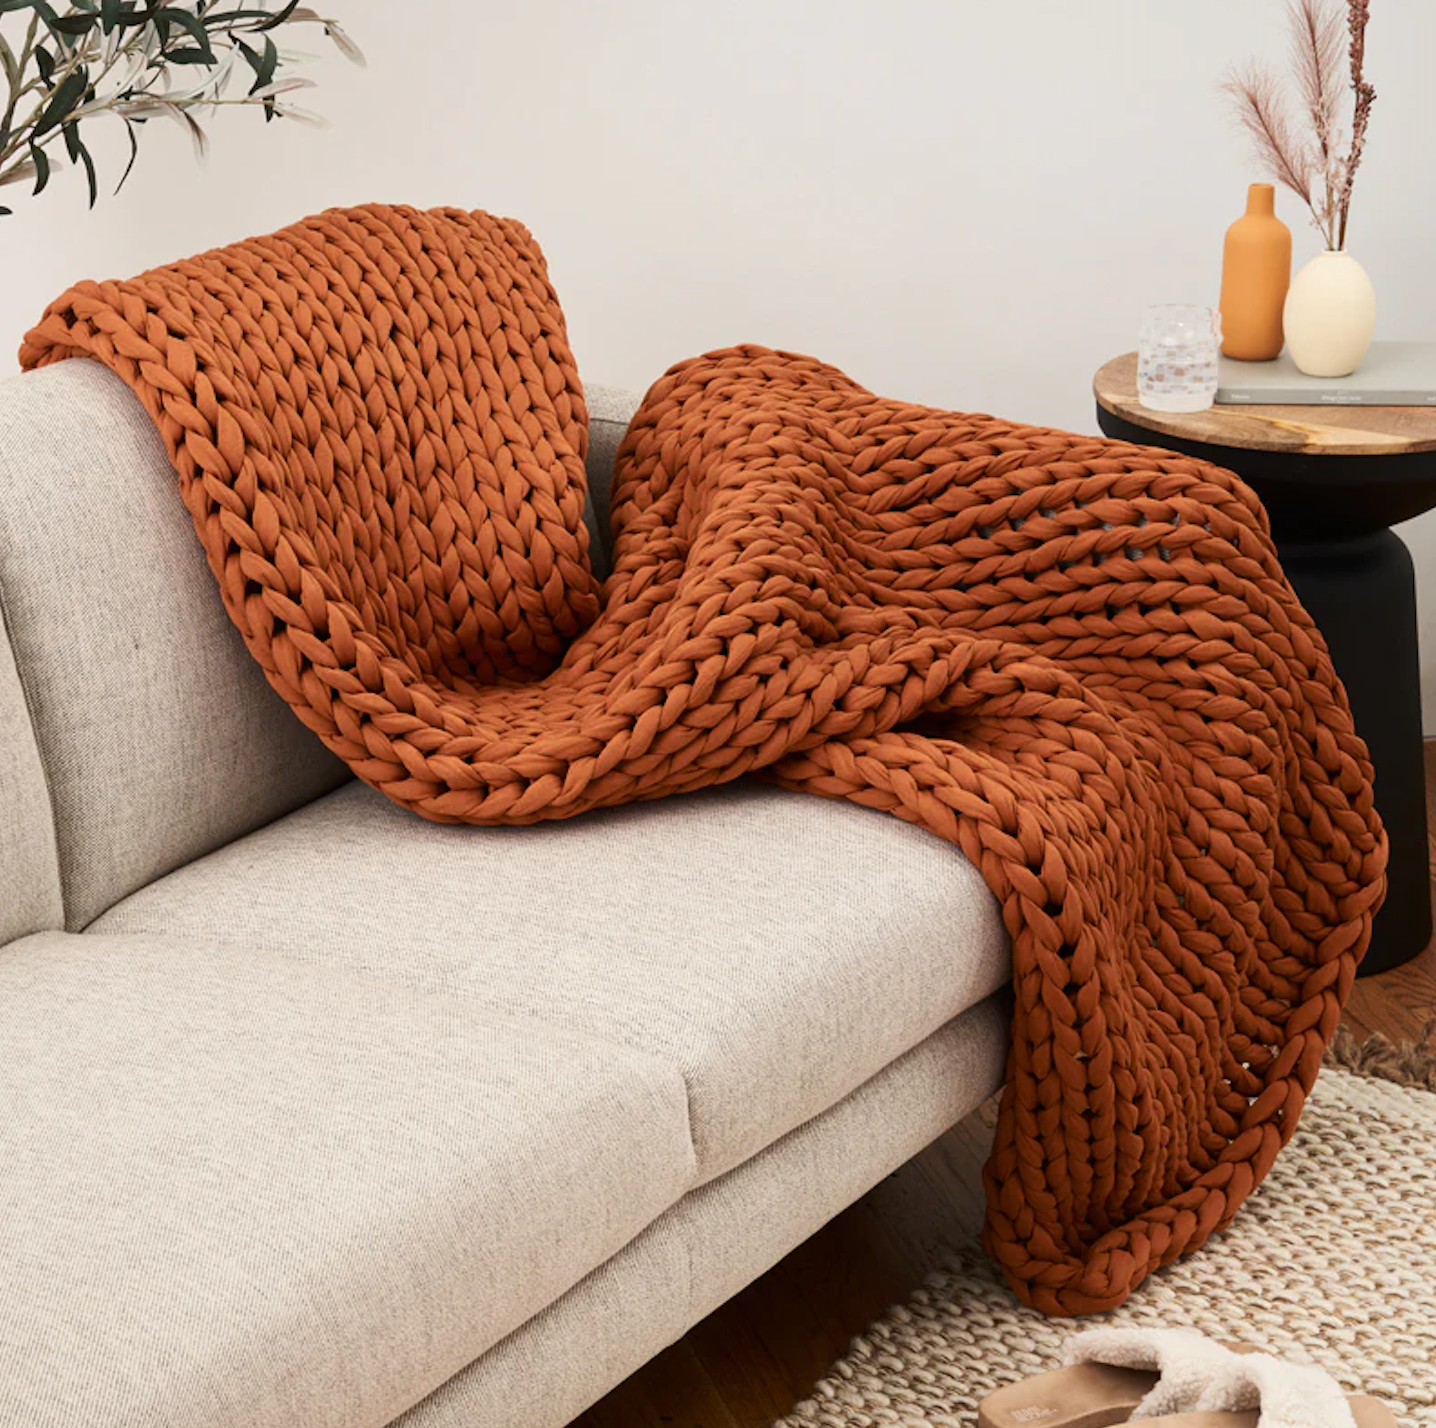 Wide knit blanket on sofa 